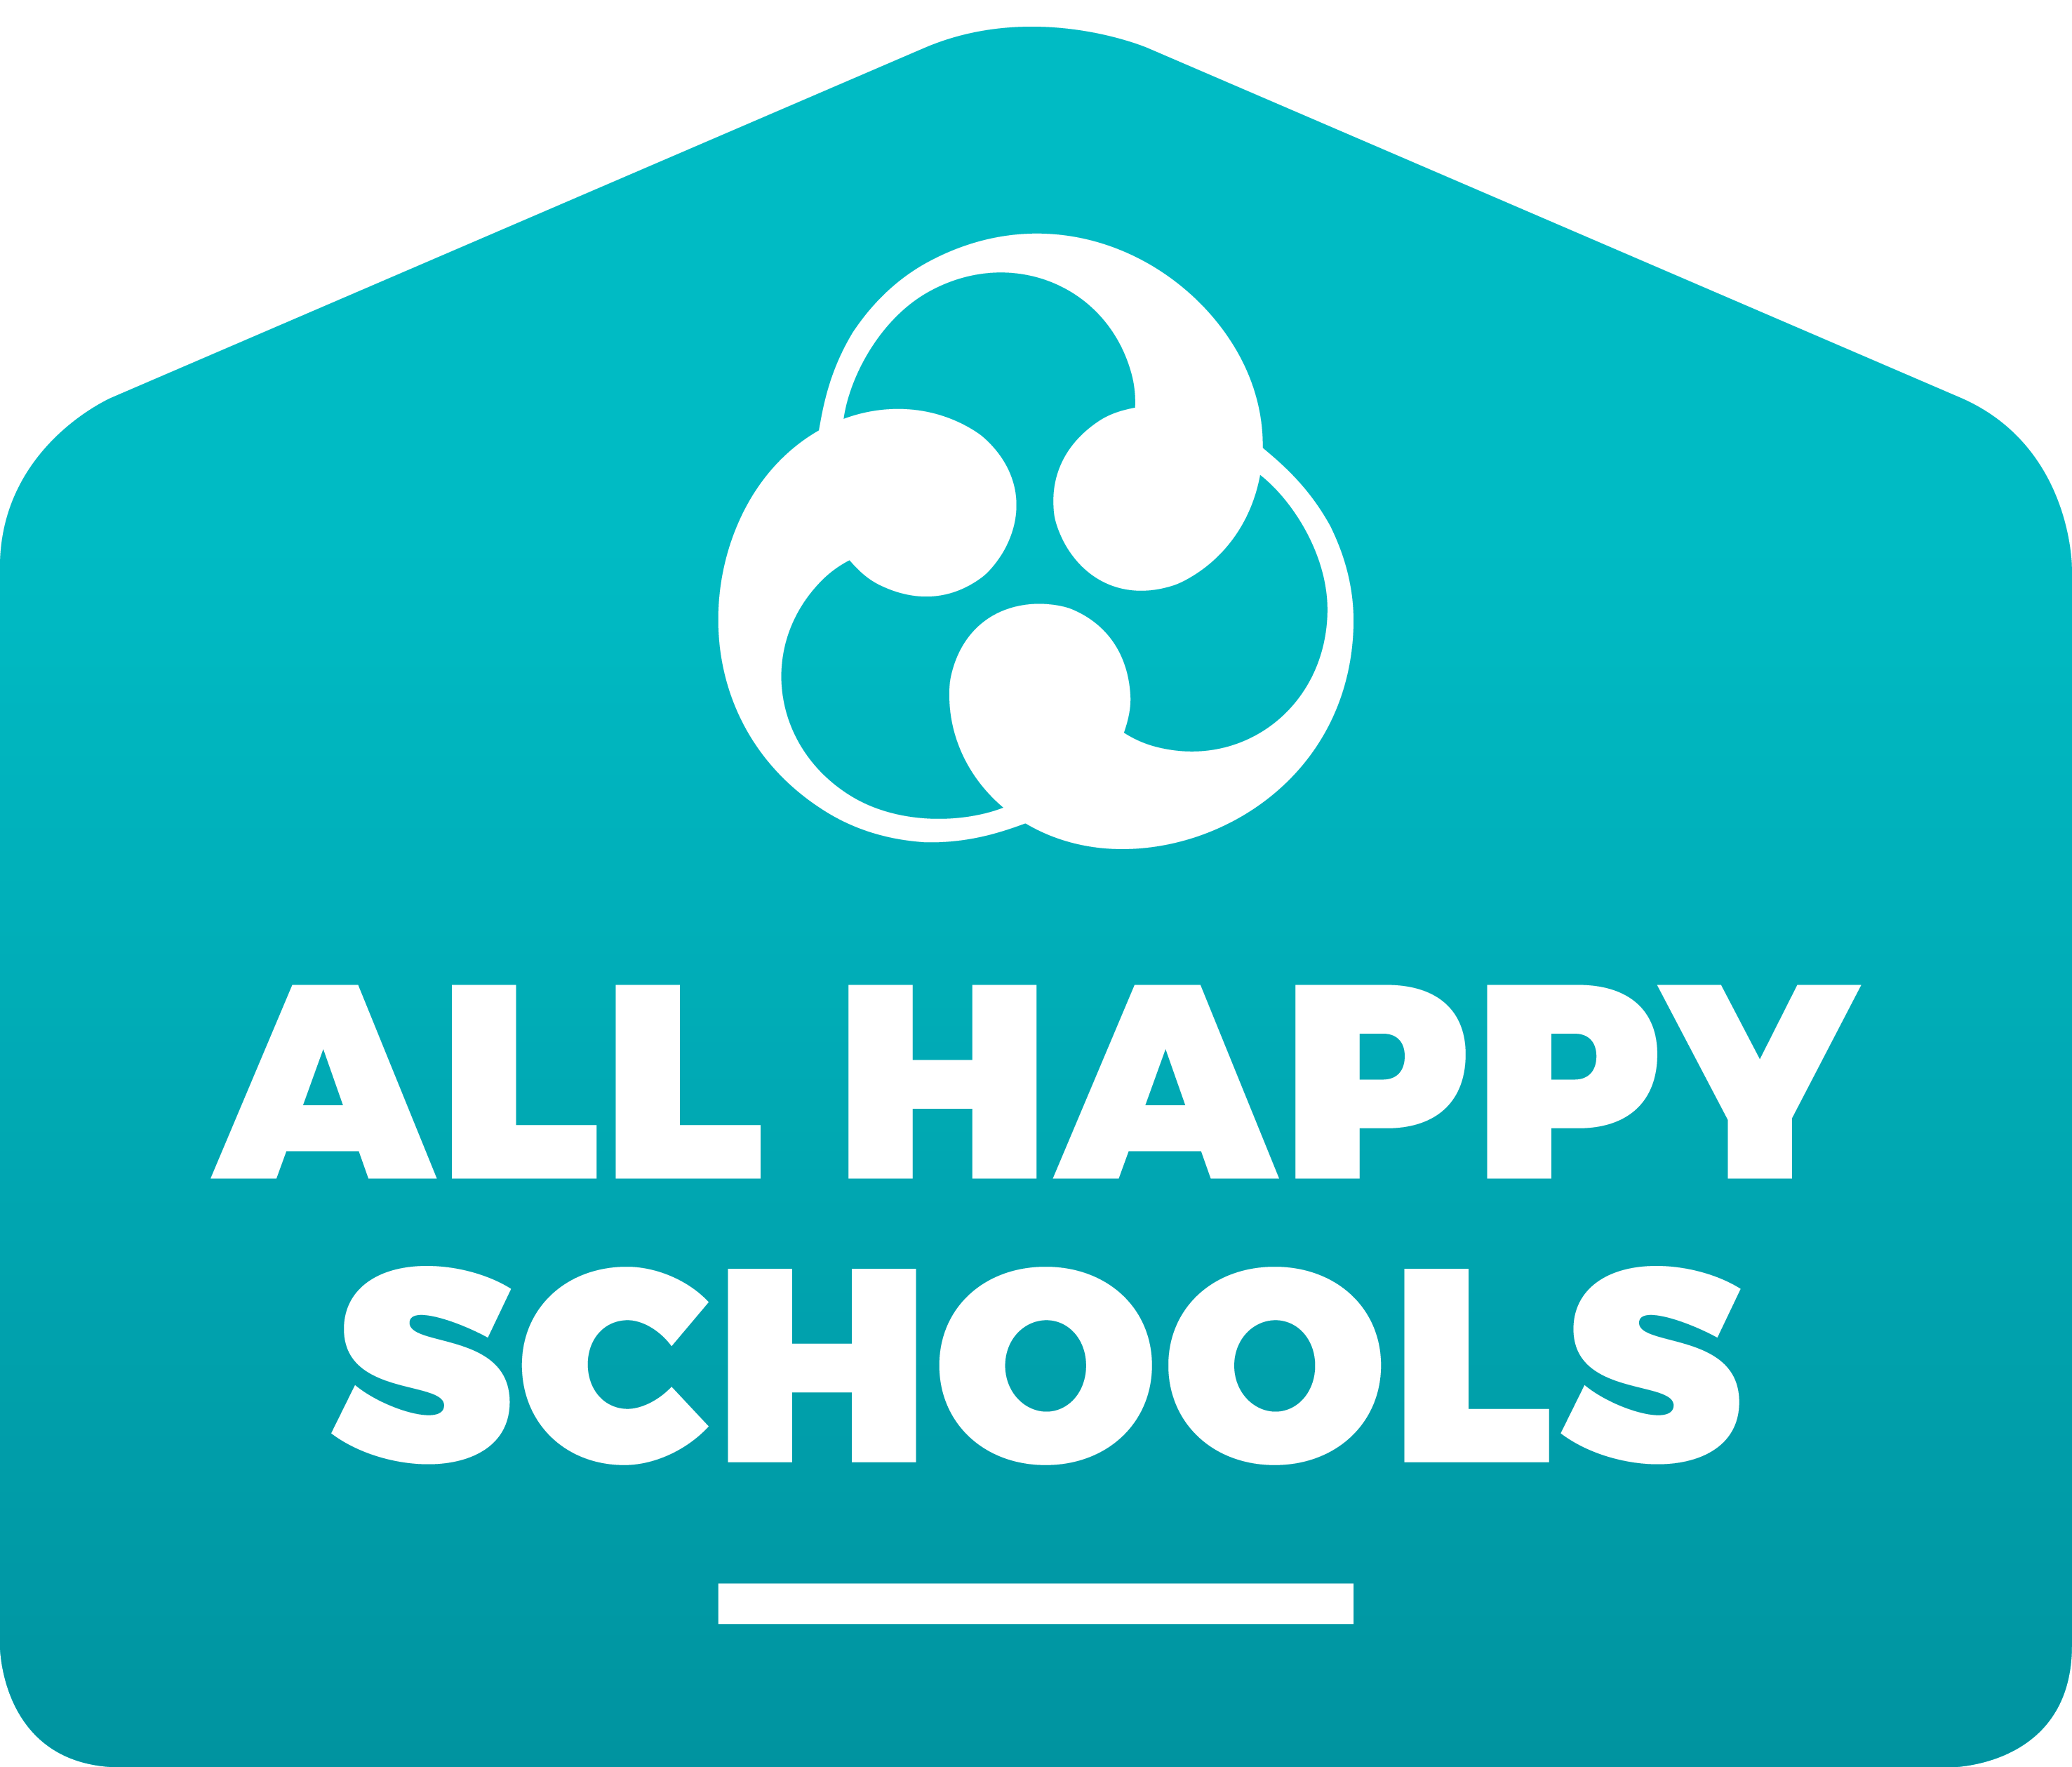 All Happy Schools